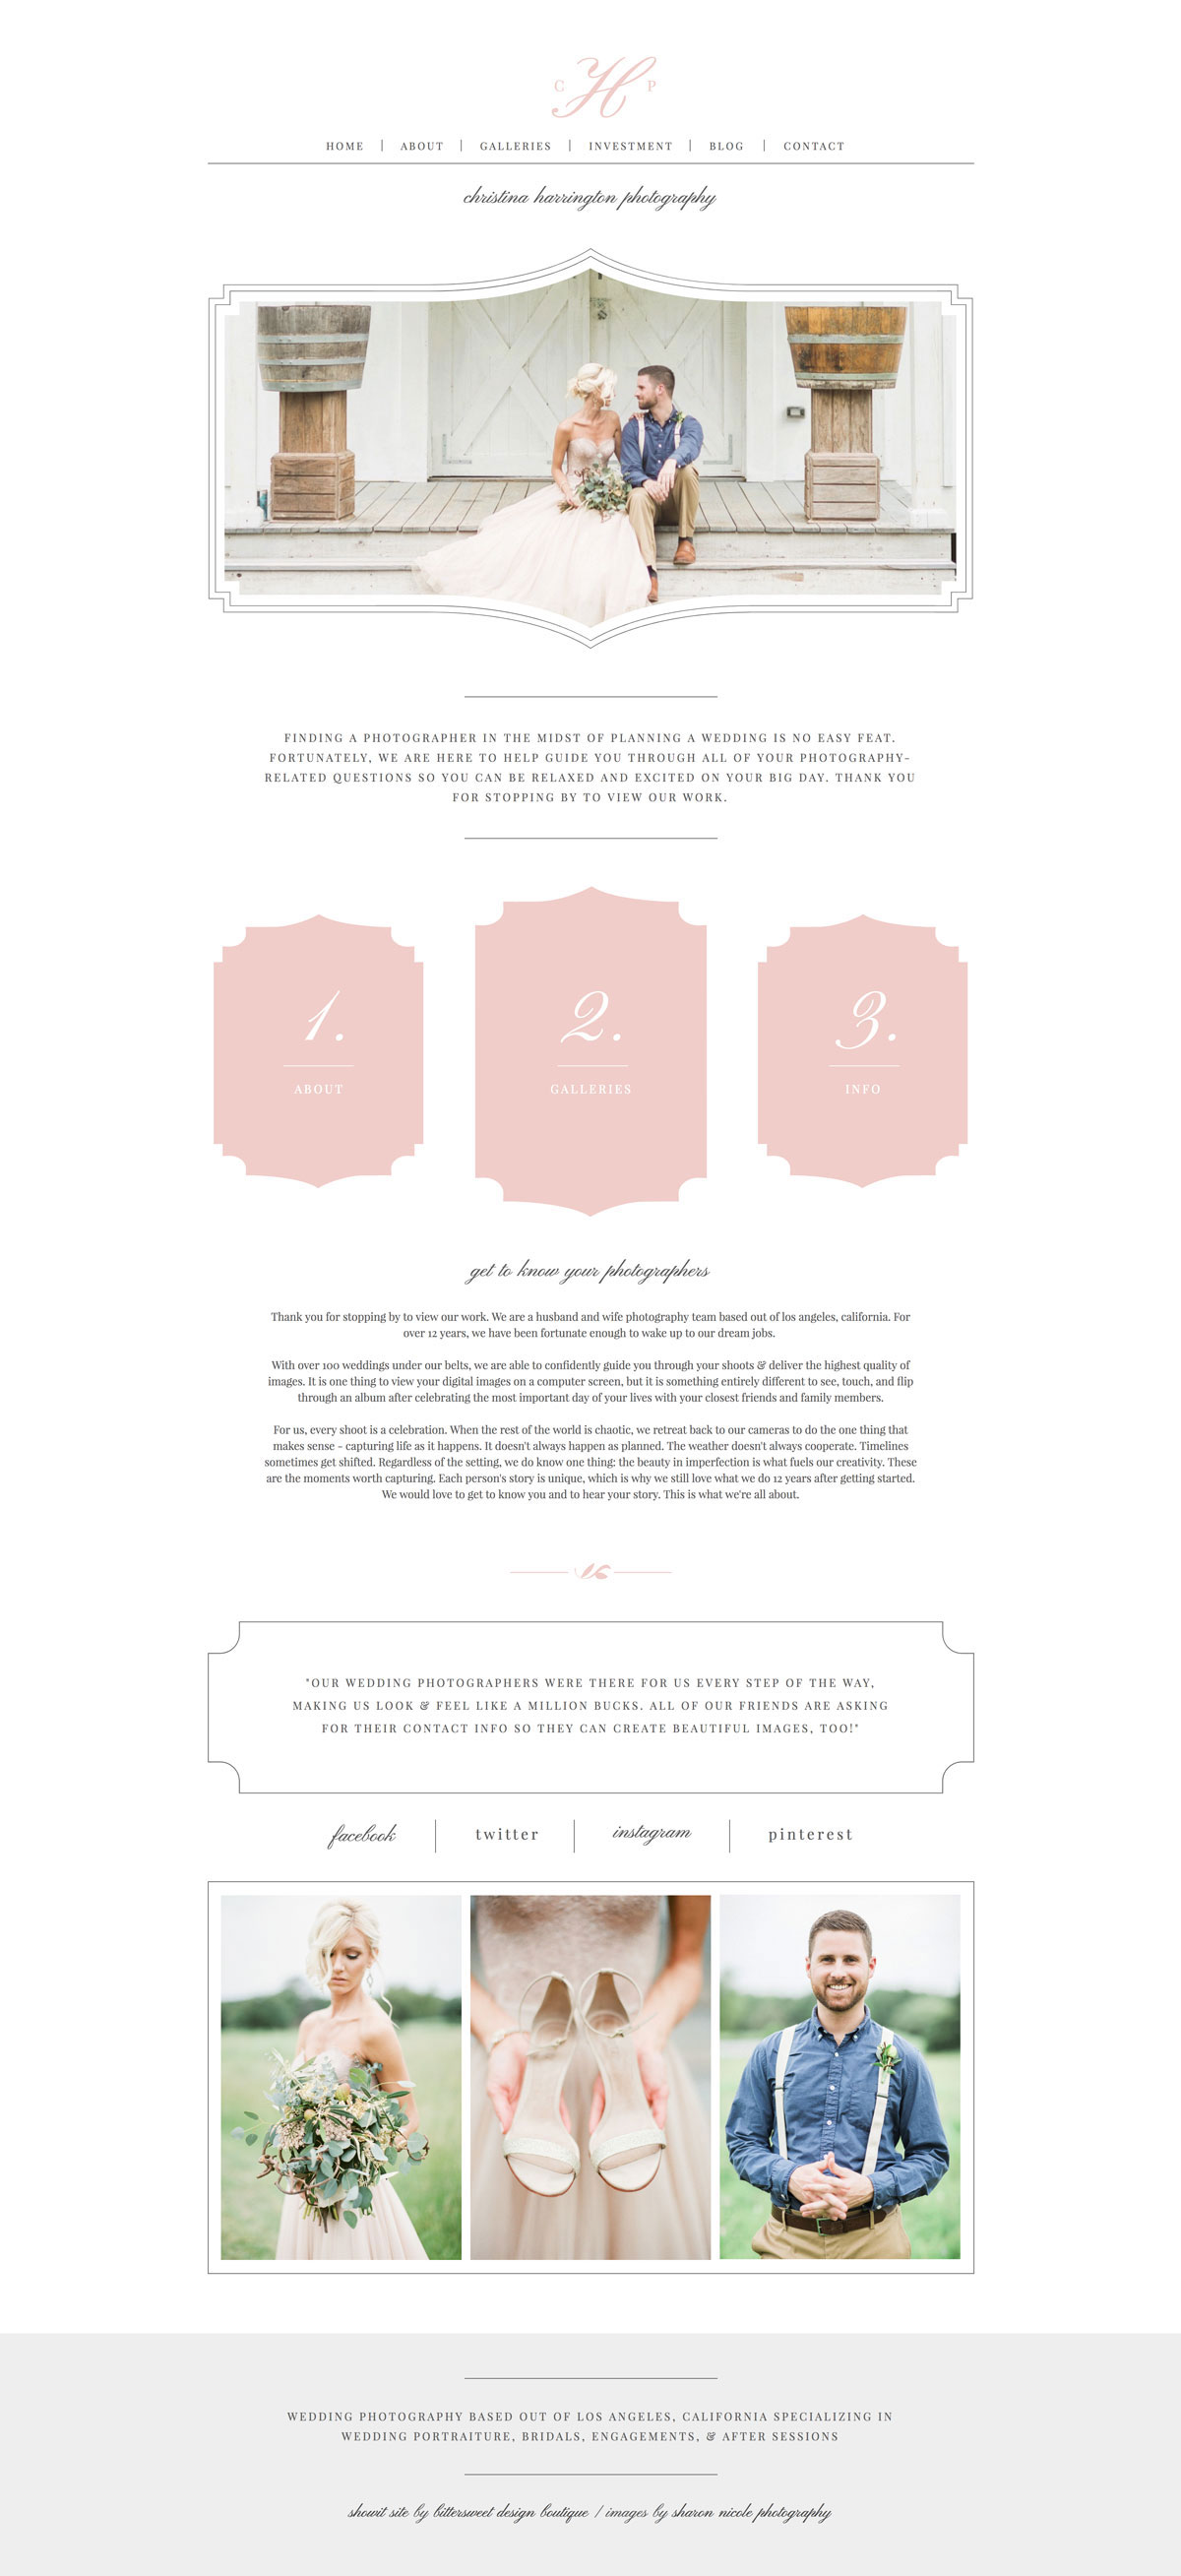 wedding photography website design for Showit